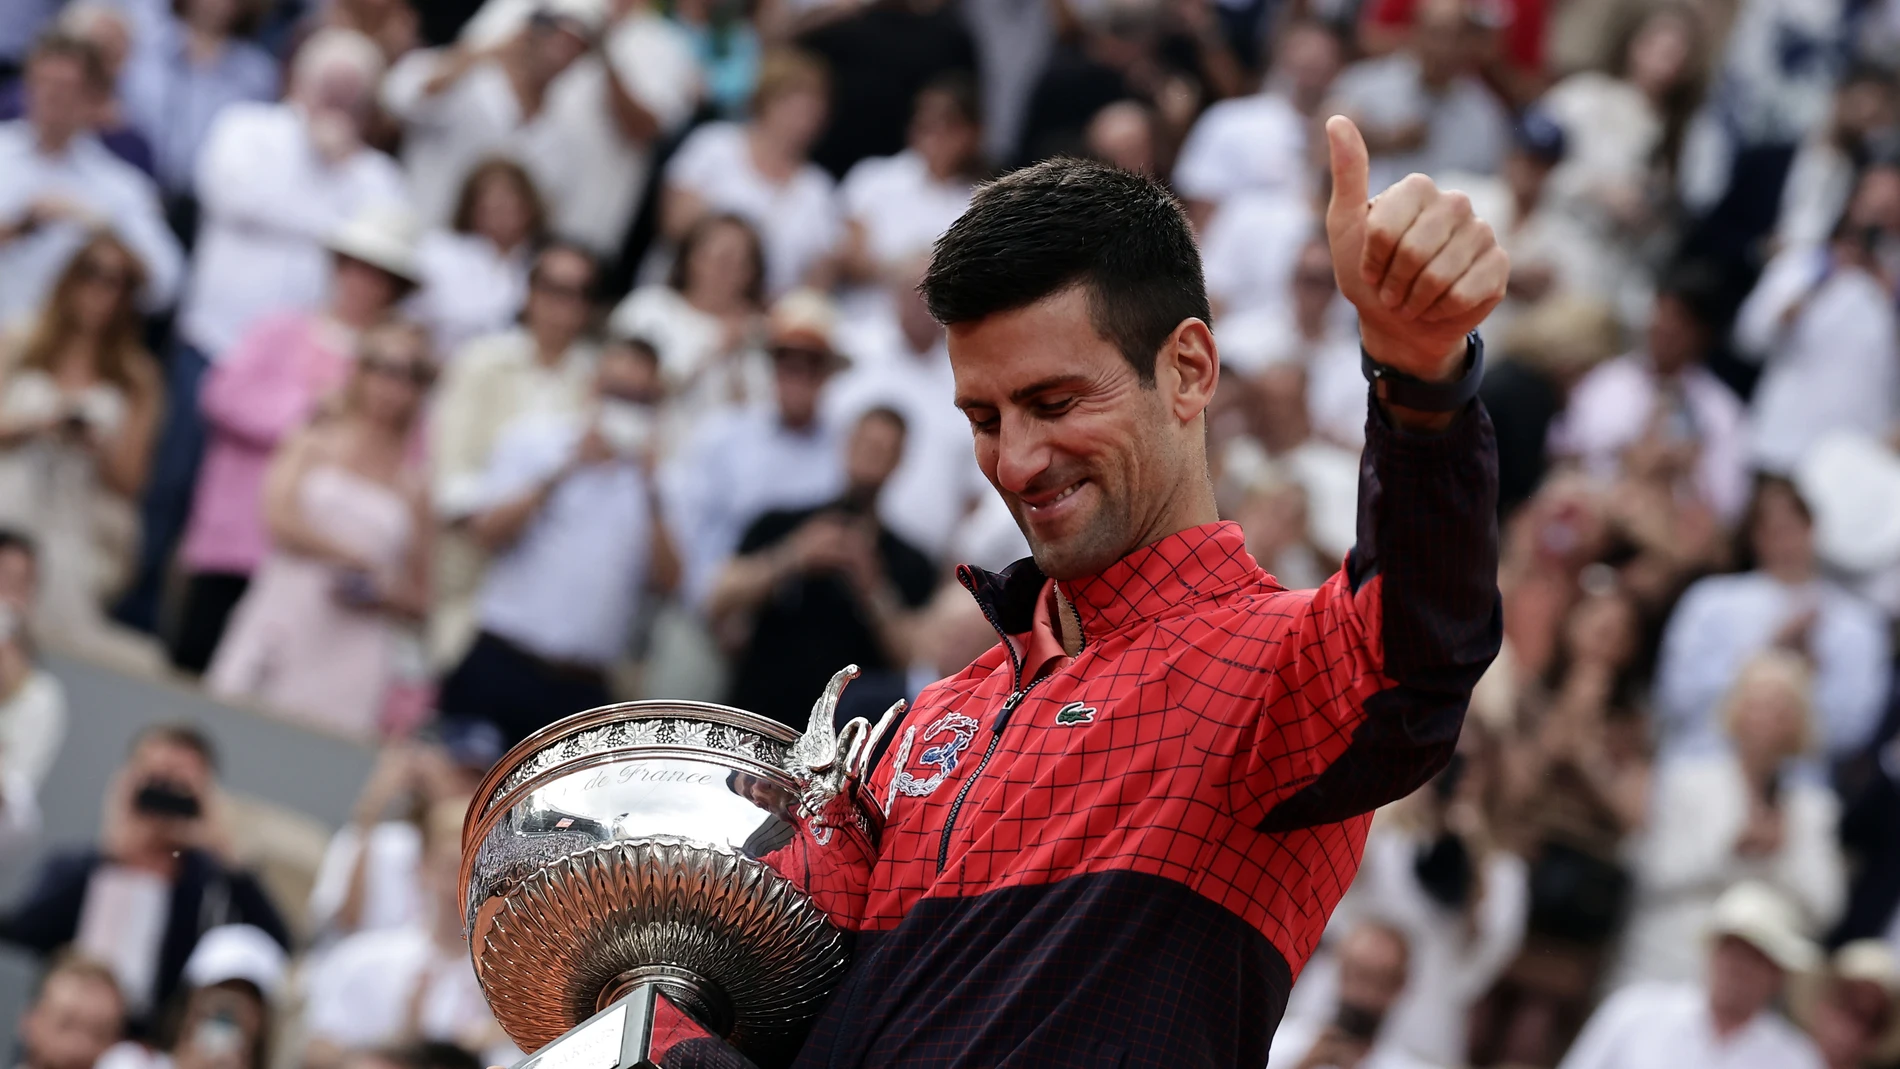 Novak Djokovic posa con su tercer Roland Garros